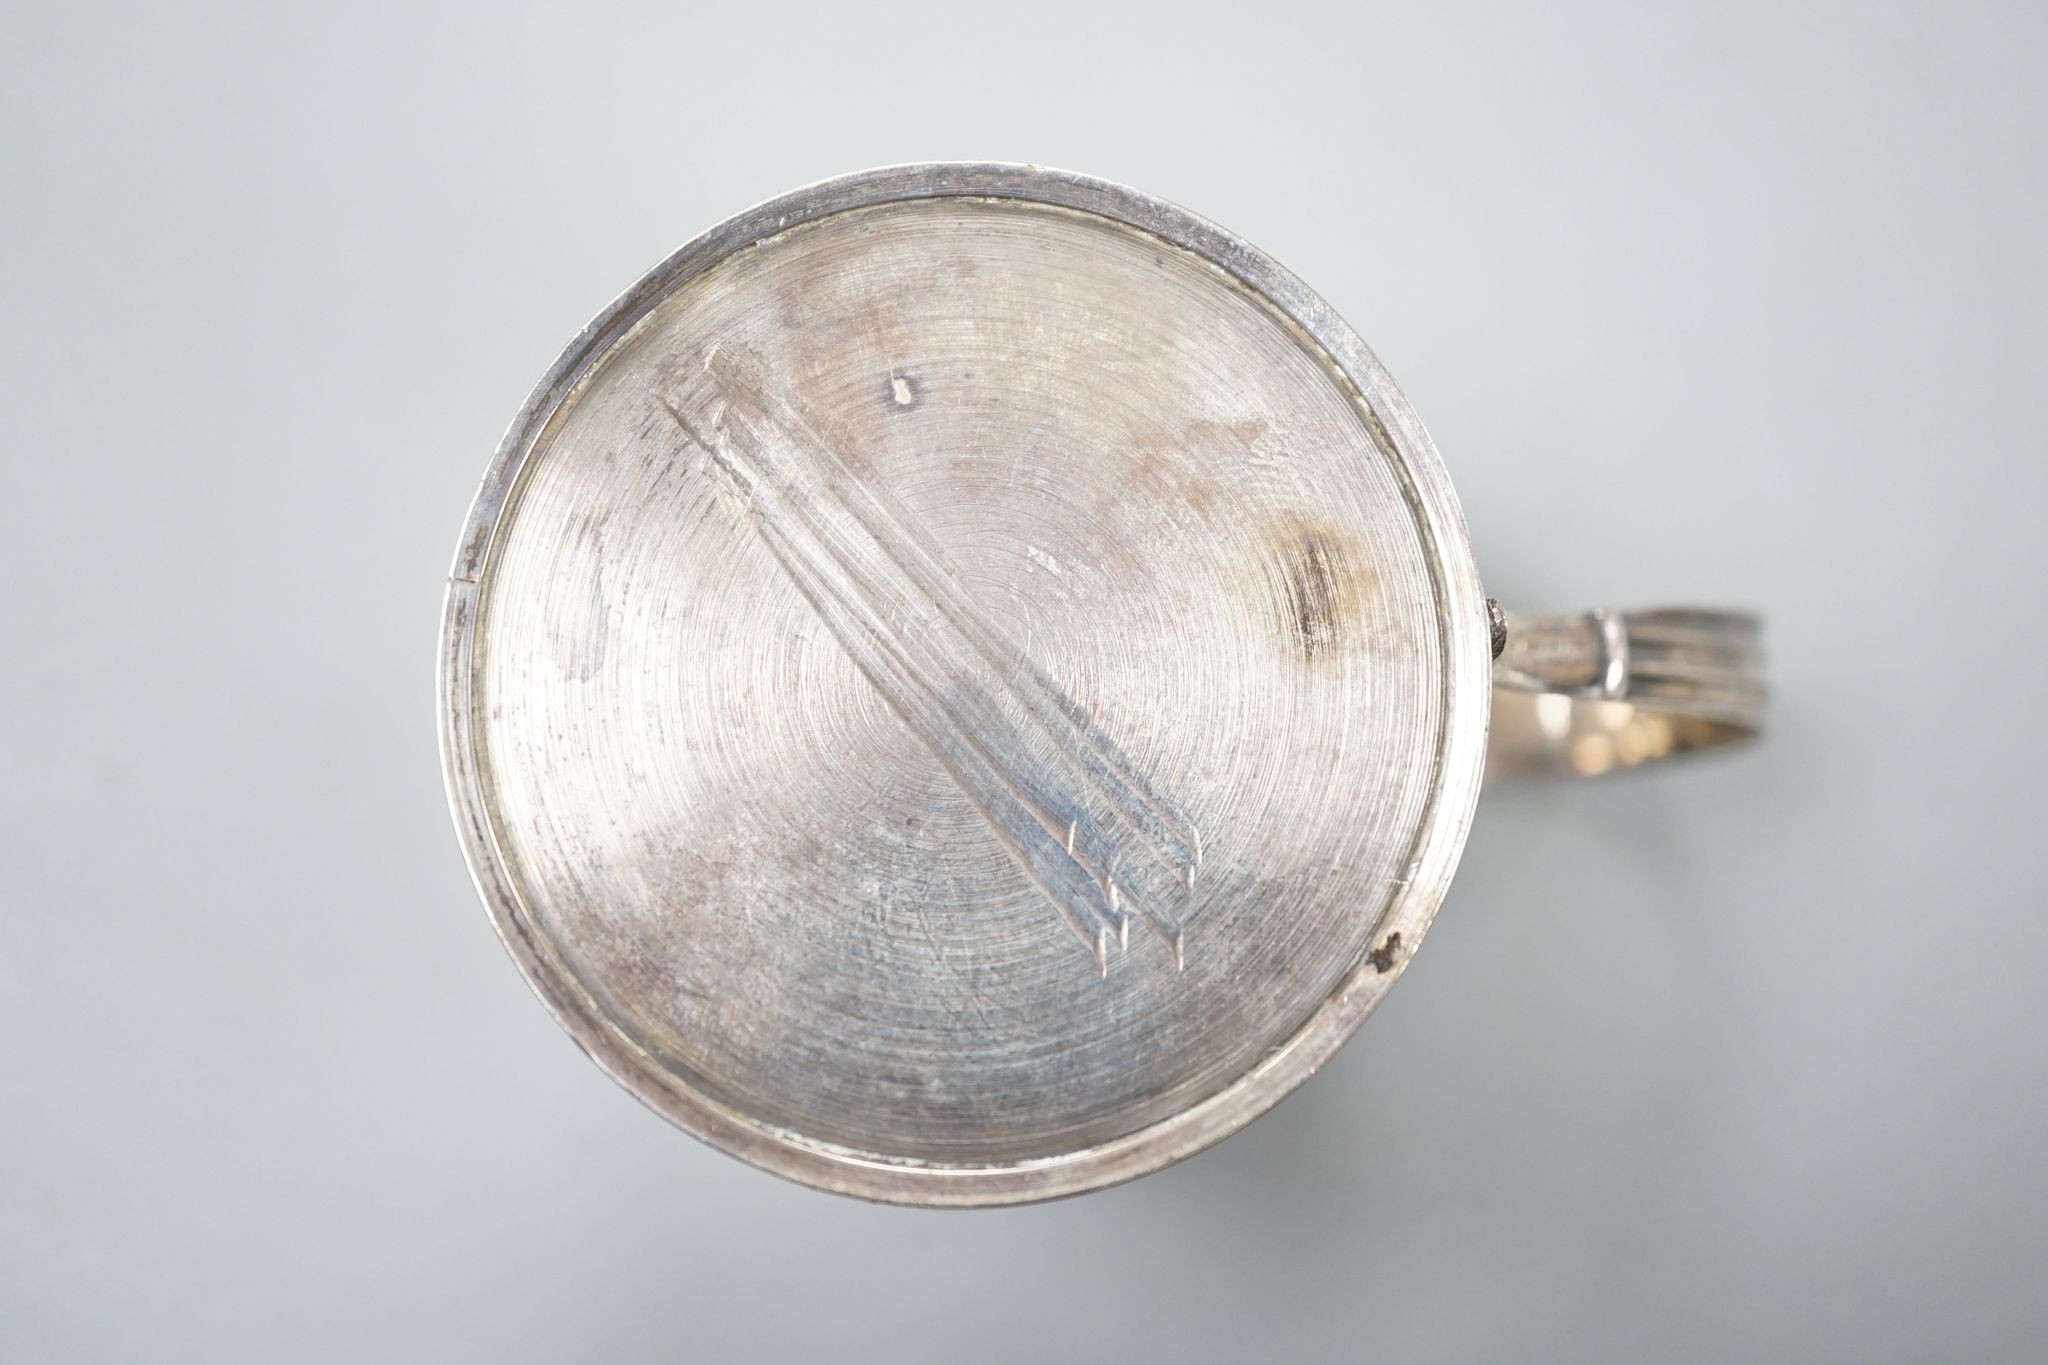 A George III silver small mug, Thomas Wallis & Jonthan Hayne, London, 1818, with engraved monogram, 57mm, 60 grams.